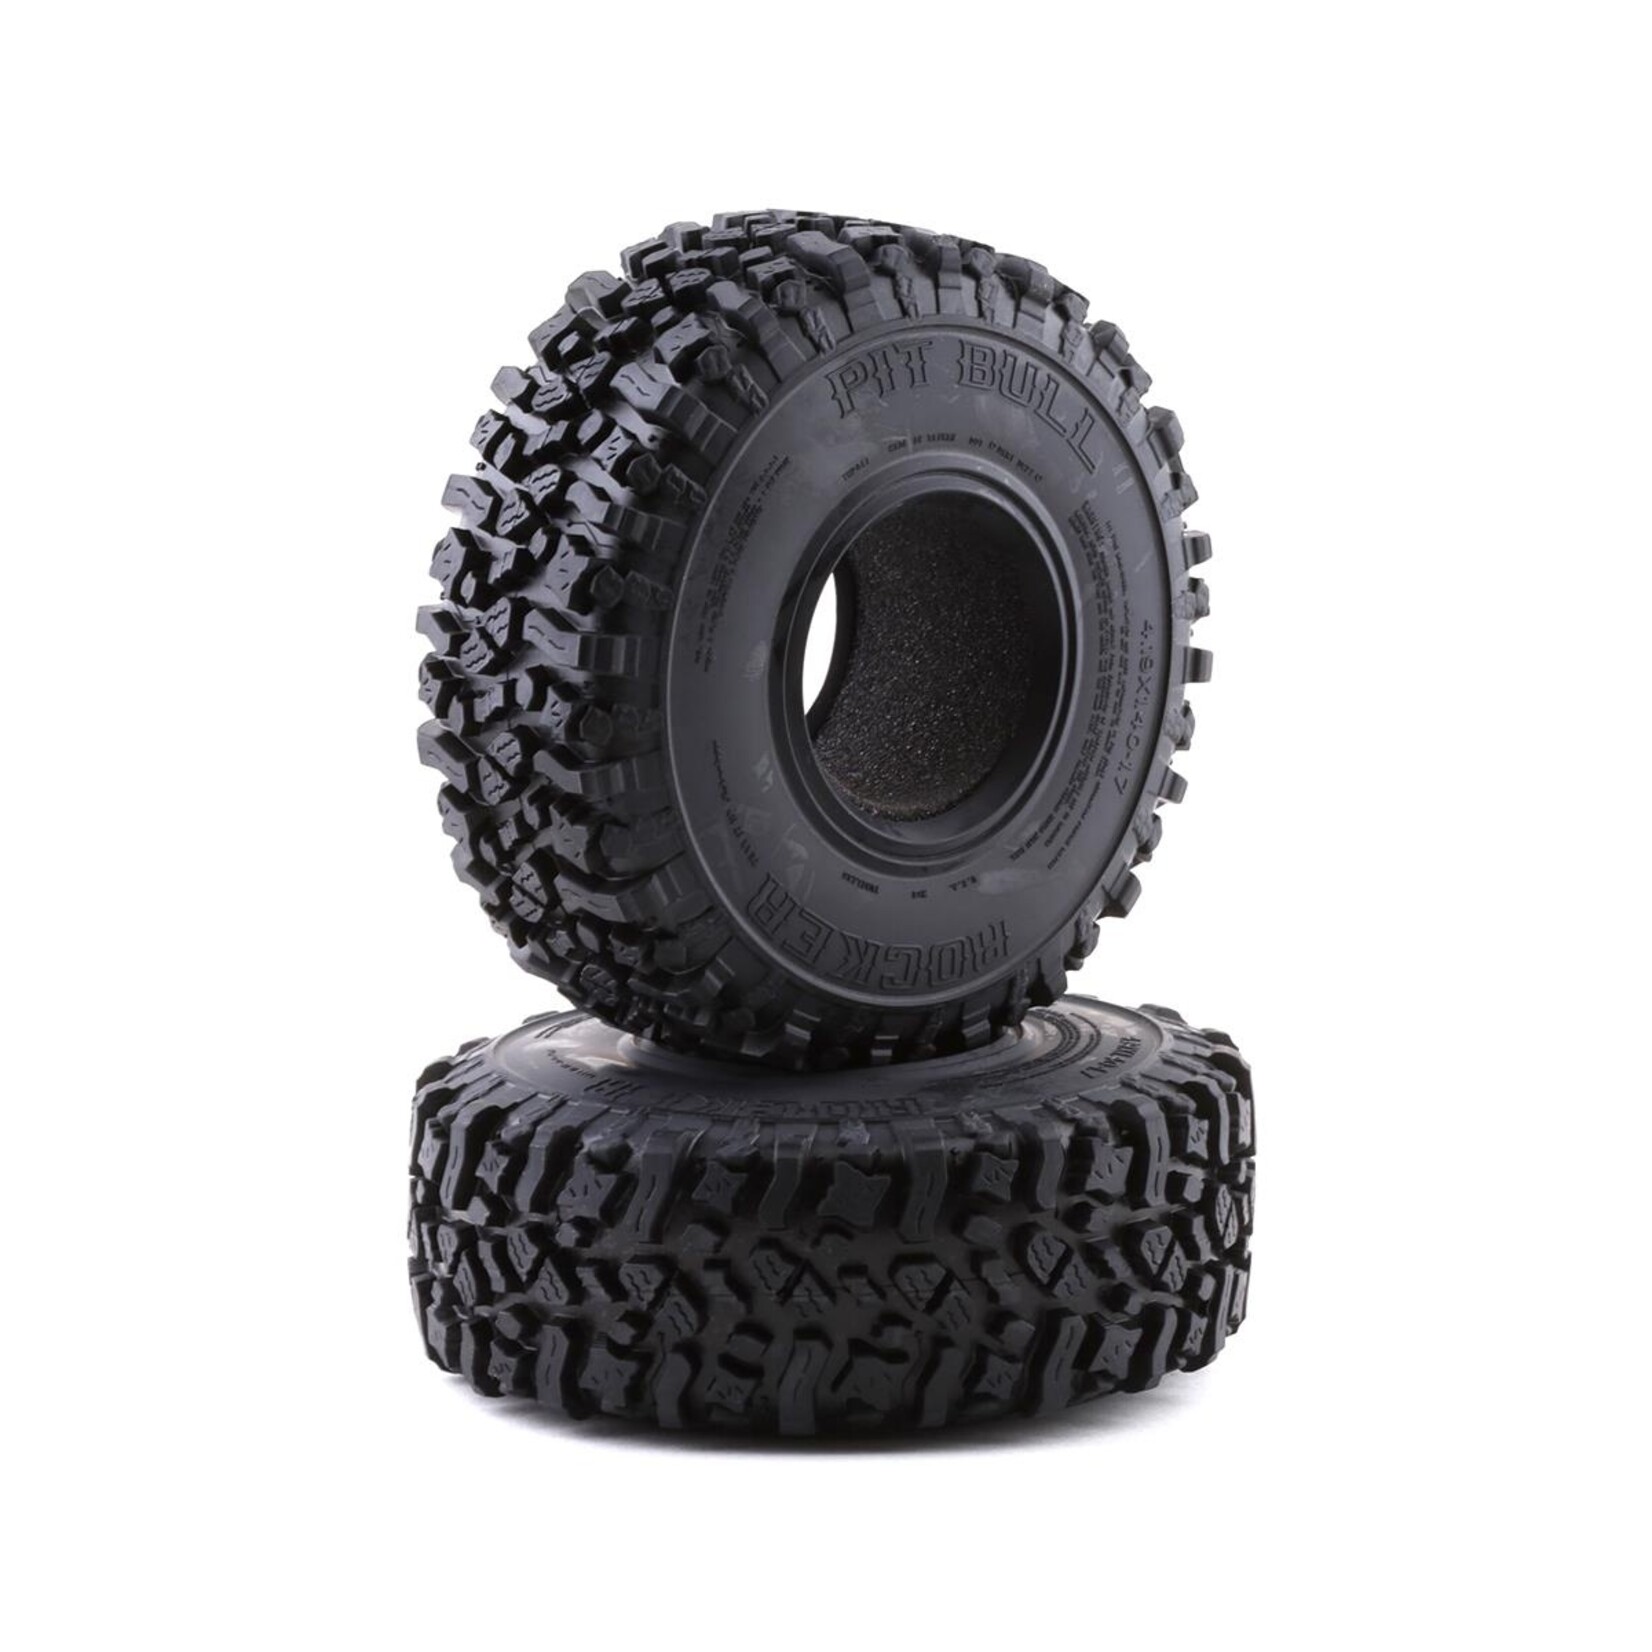 Pit Bull Pit Bull Tires Rocker Super Scale 1.7" Crawler Tires w/Foam (2) (Alien) #PB9025AK